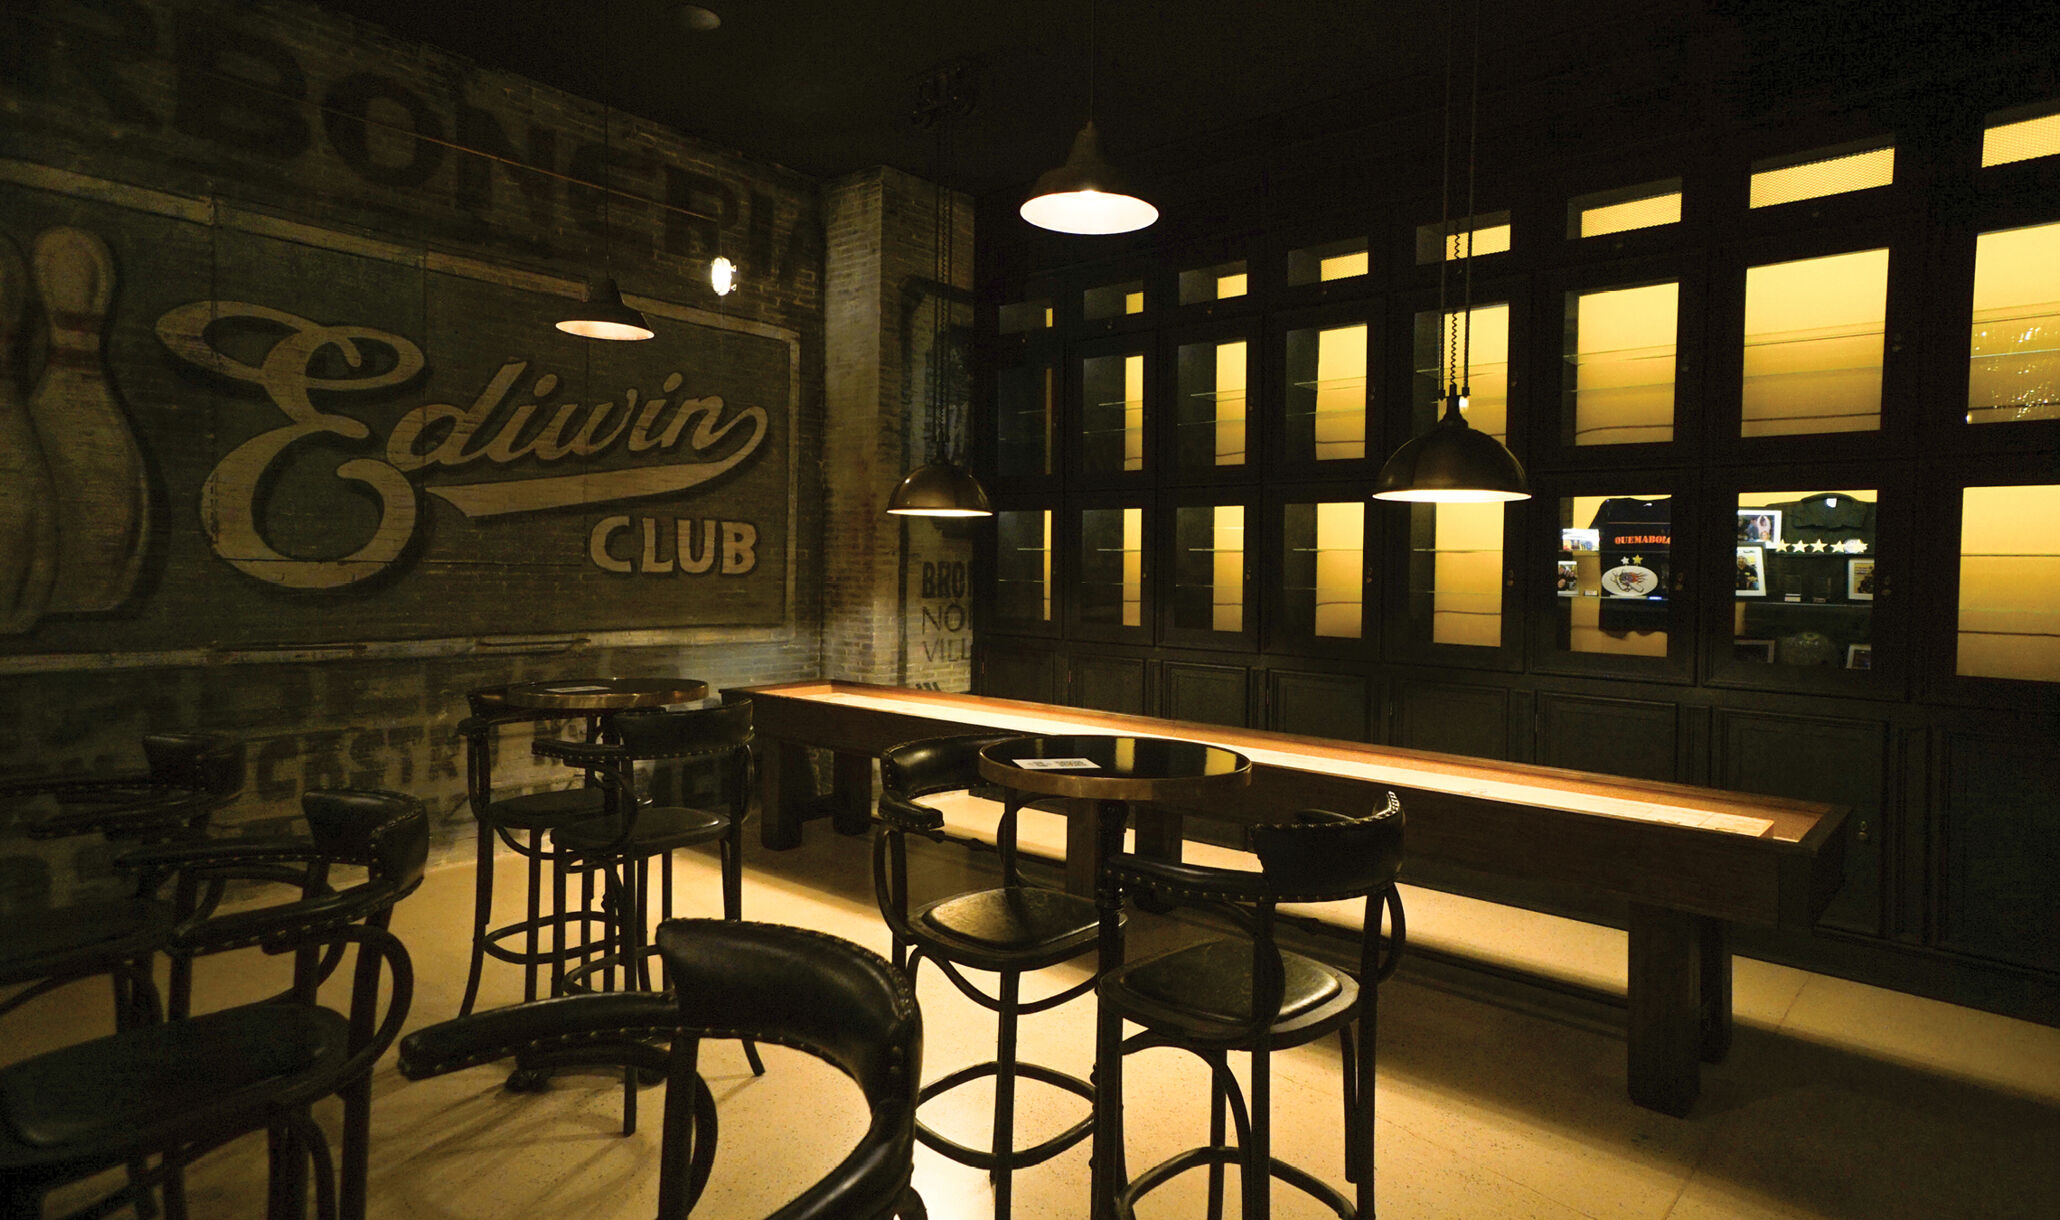 Ediwin Bowling Club - Paterna, Spain - bar seating area-2